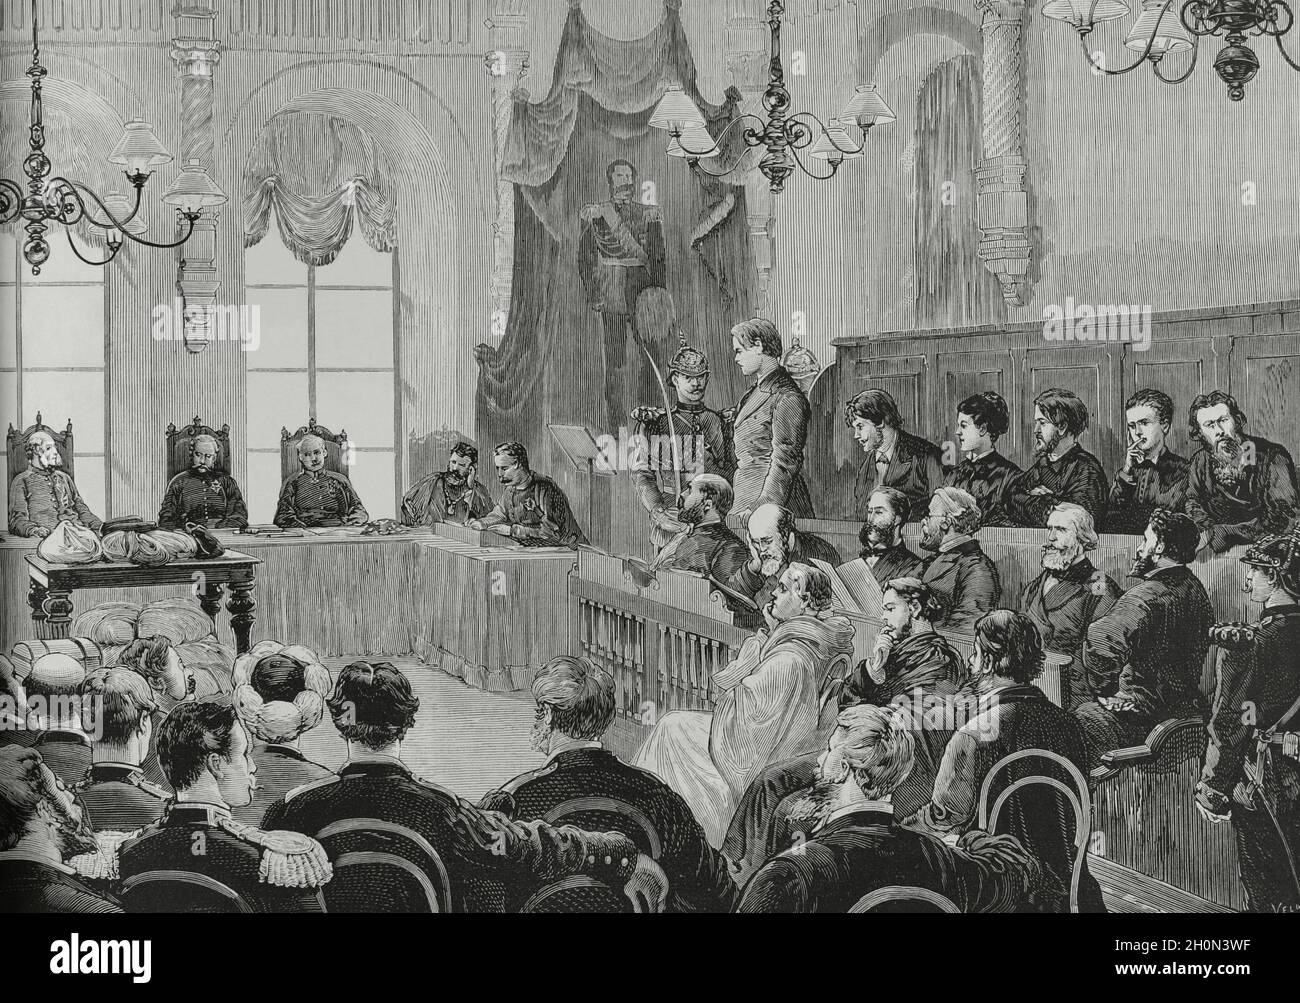 Russia, San Pietroburgo. Processo dei nichilisti che uccisero lo zar Alessandro II il 13 marzo 1881. I terroristi Nikolai Kibalchich, Sophia Perovskaya, Foto Stock